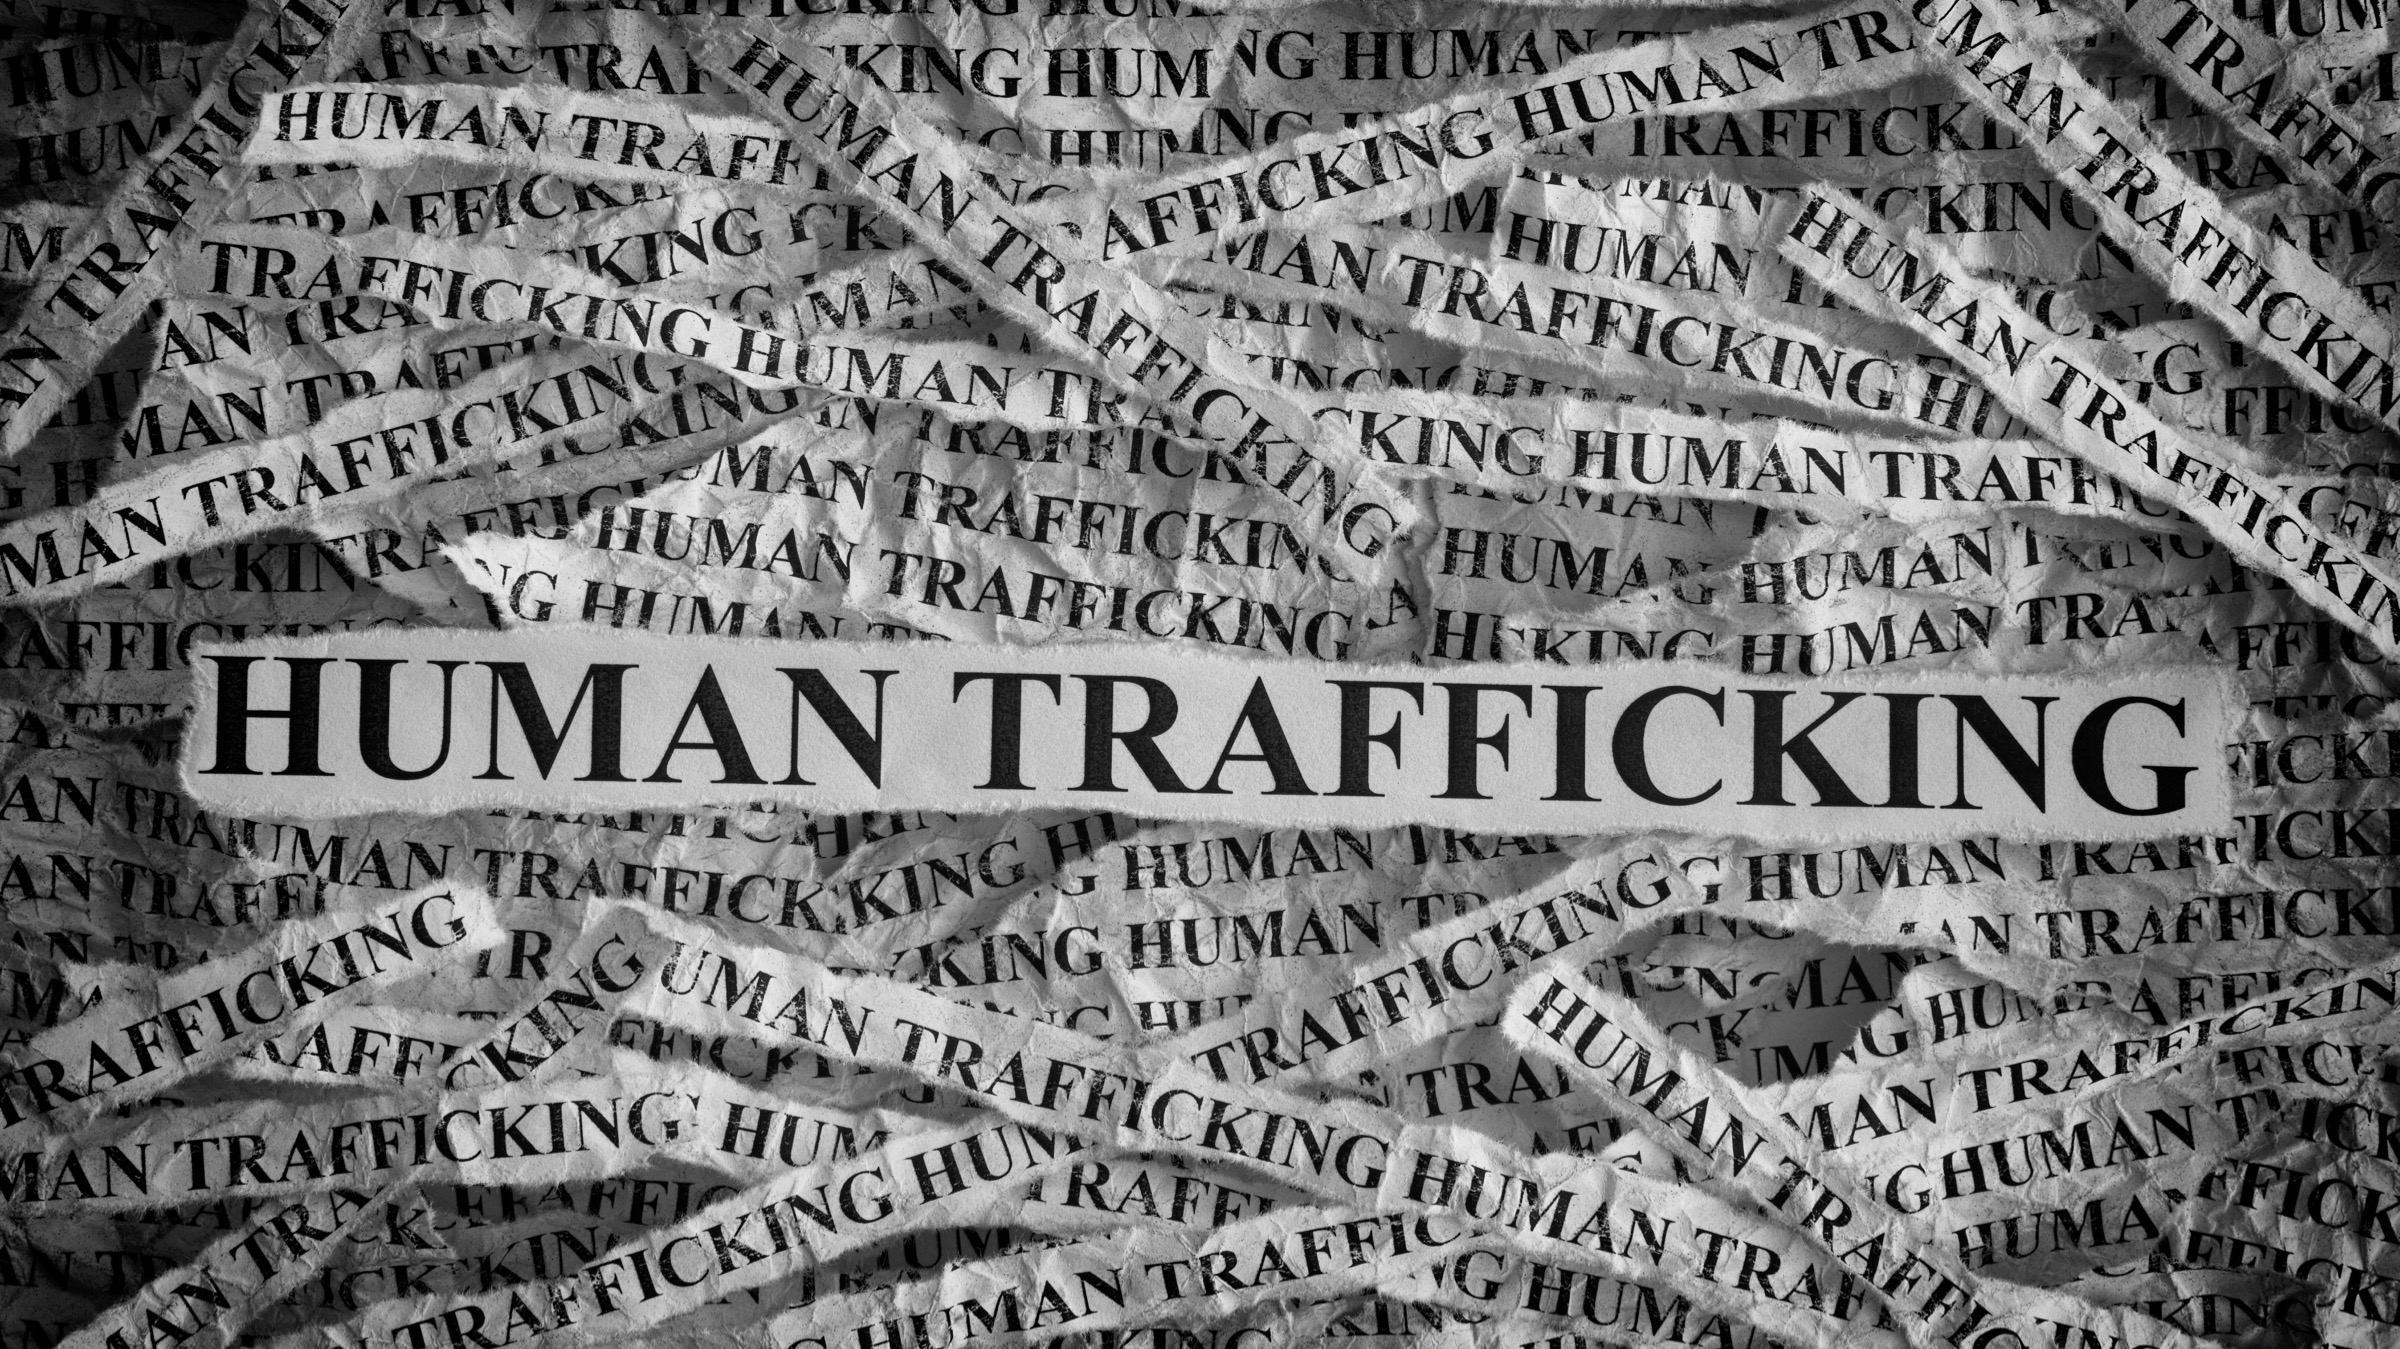 human trafficking money statistics